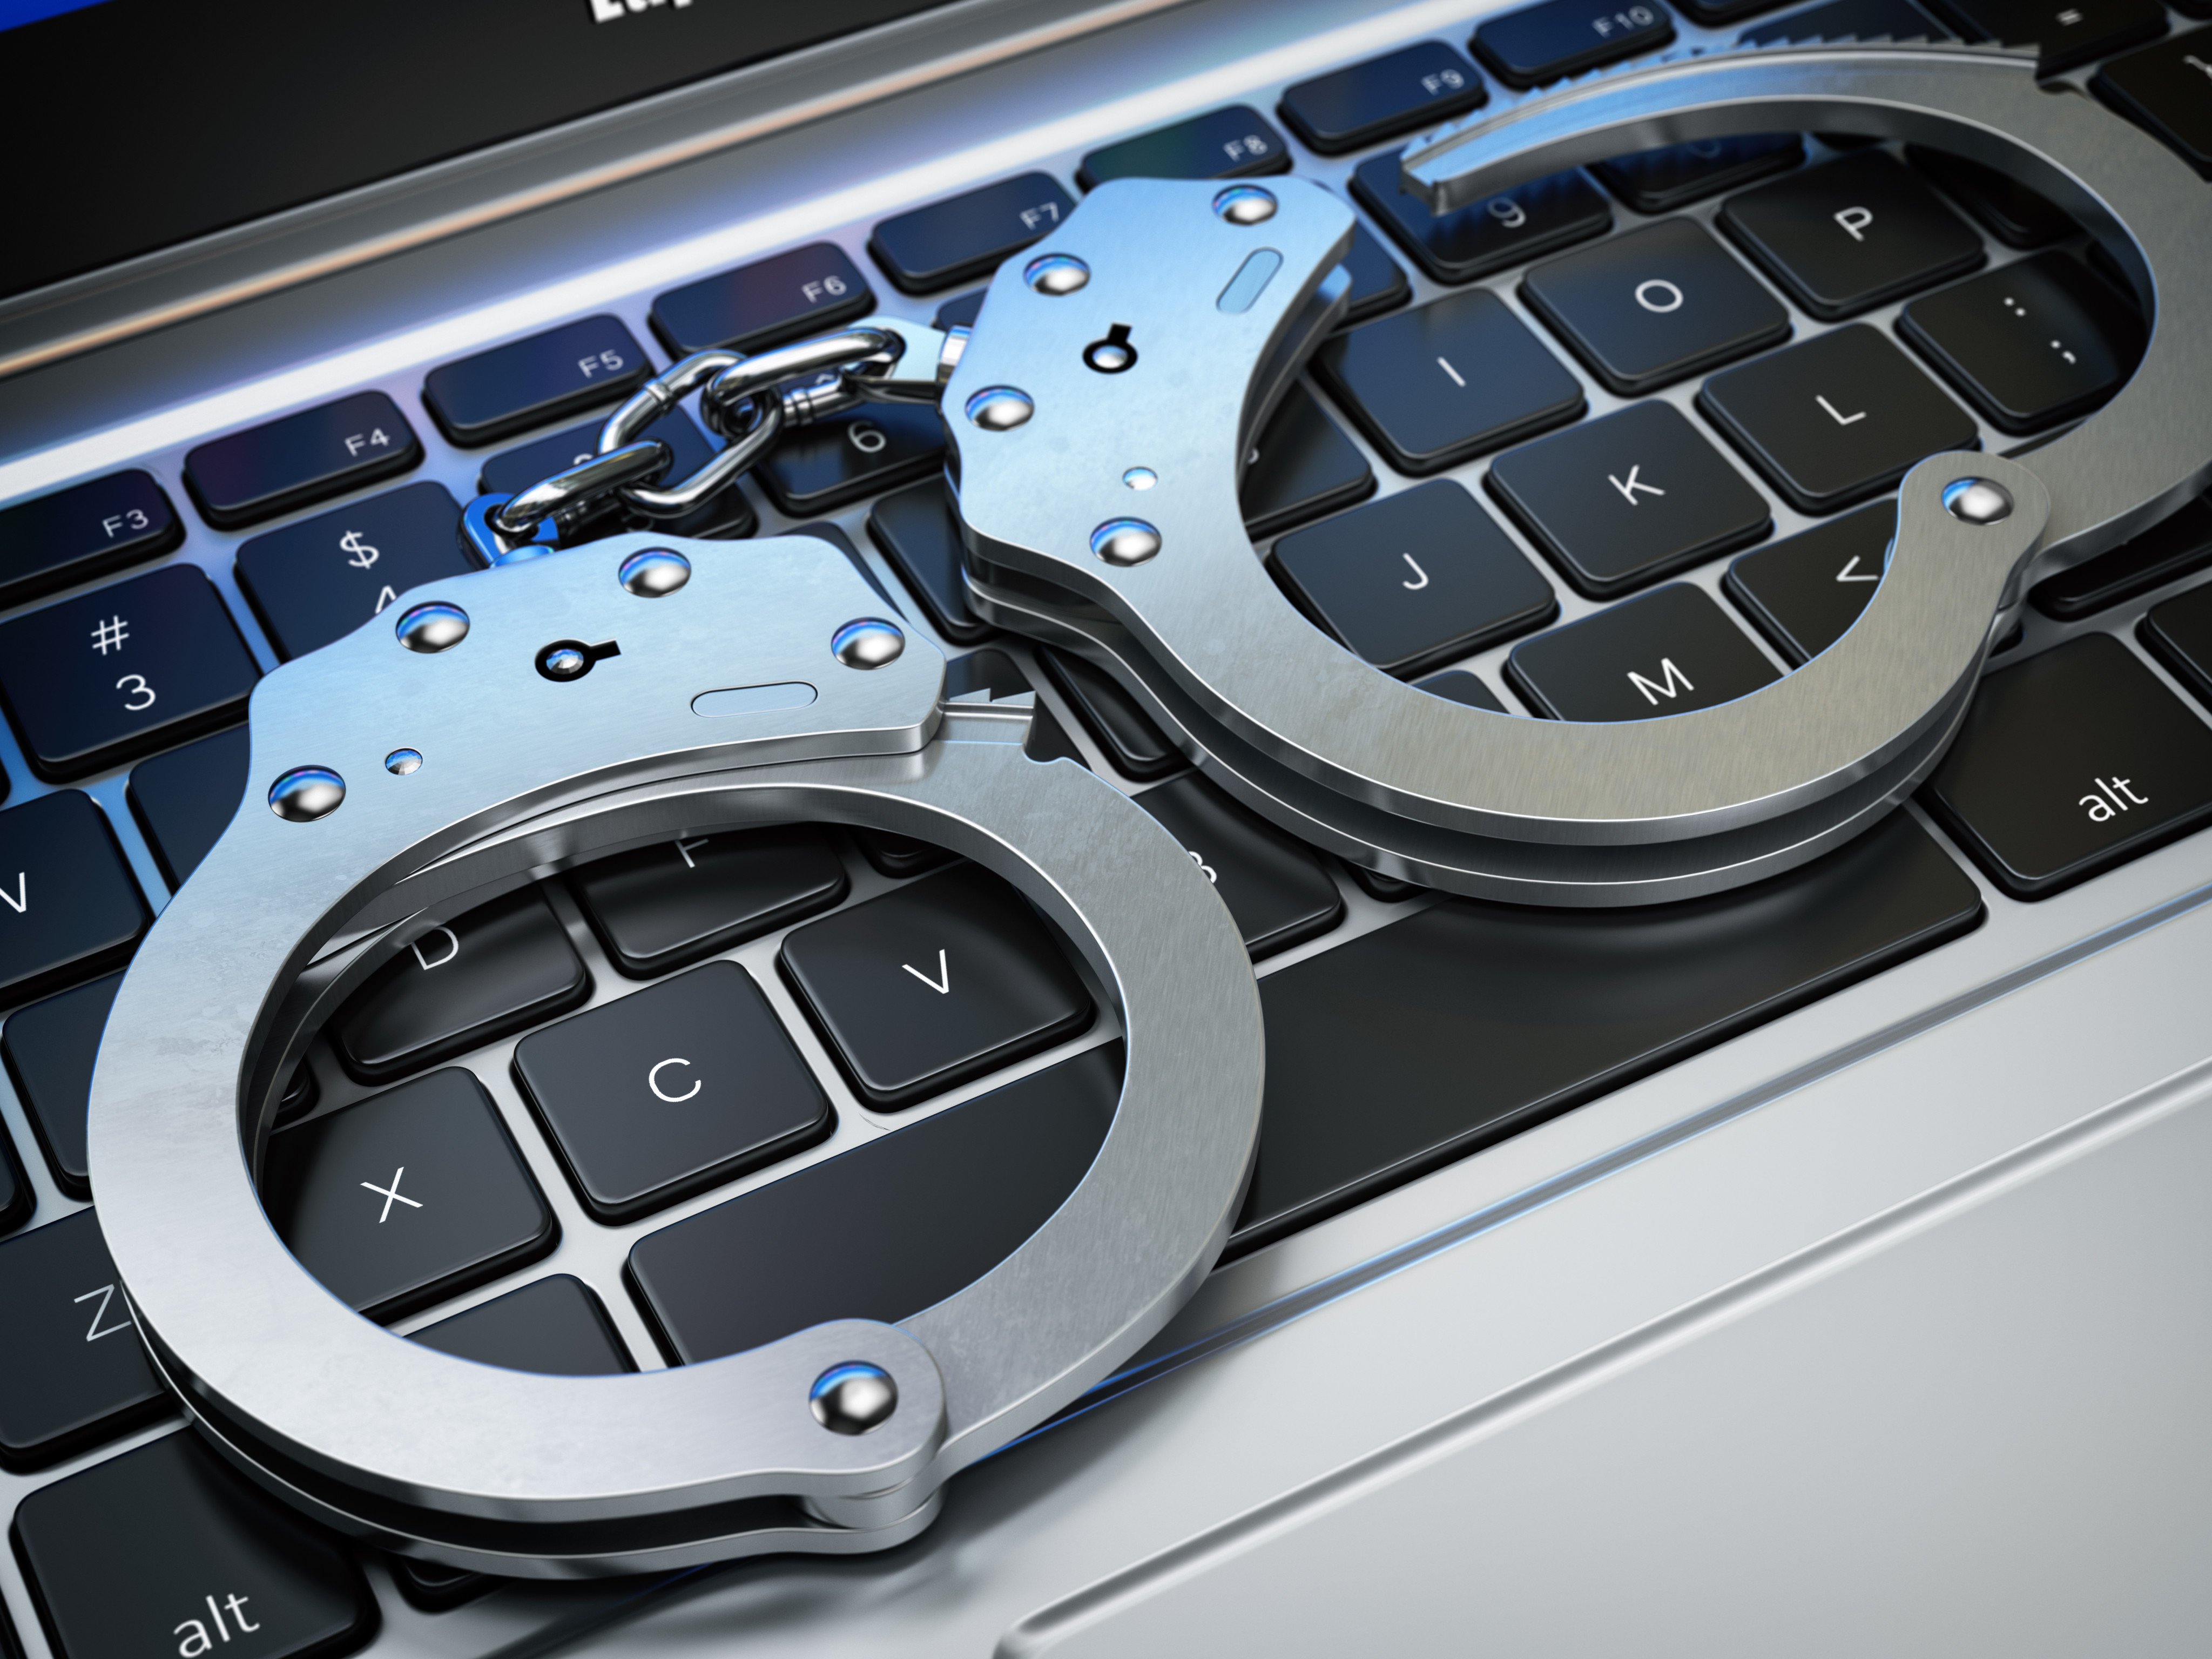 Handcuffs on a laptop keyboard. Photo: Shutterstock